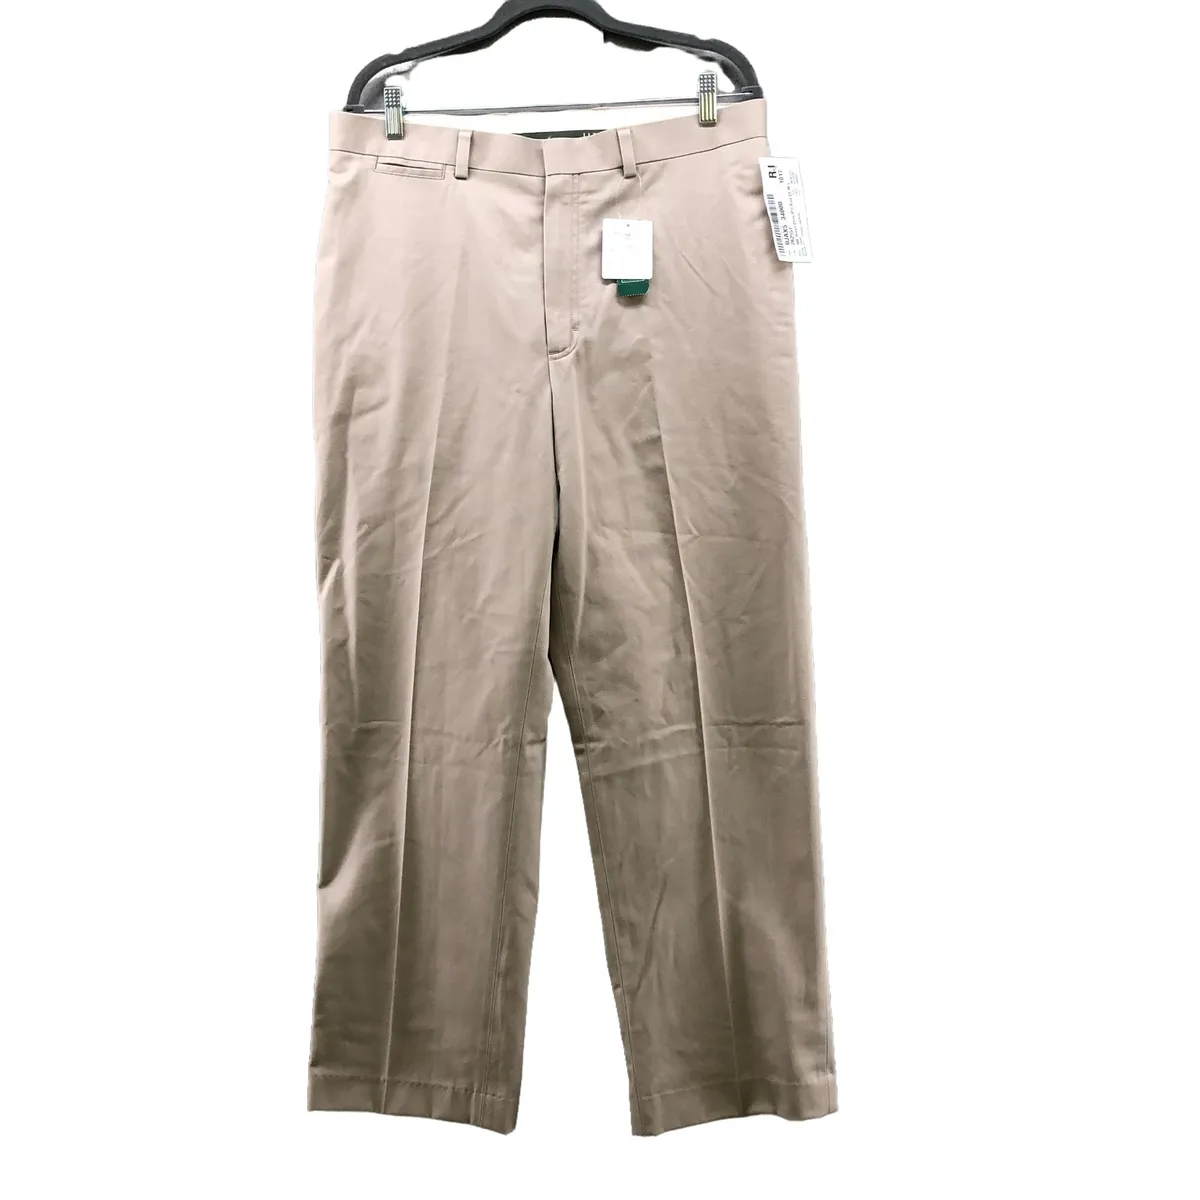 Men's 11 Plain Front Wrinkle Resistant Chino Shorts